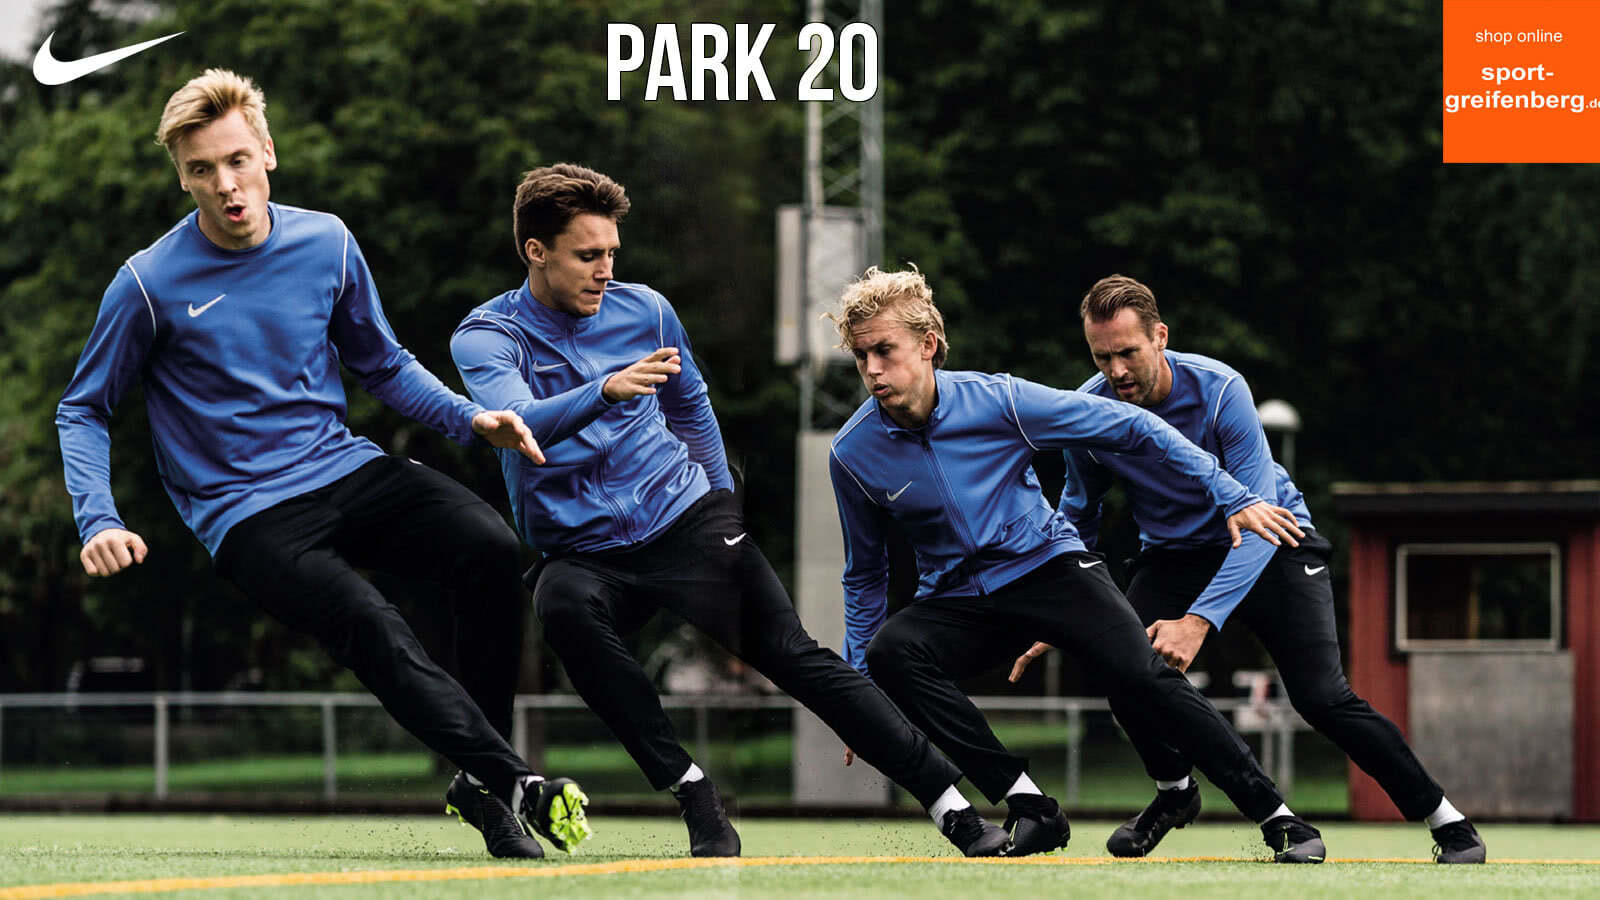 Nike Park 20 Teamline